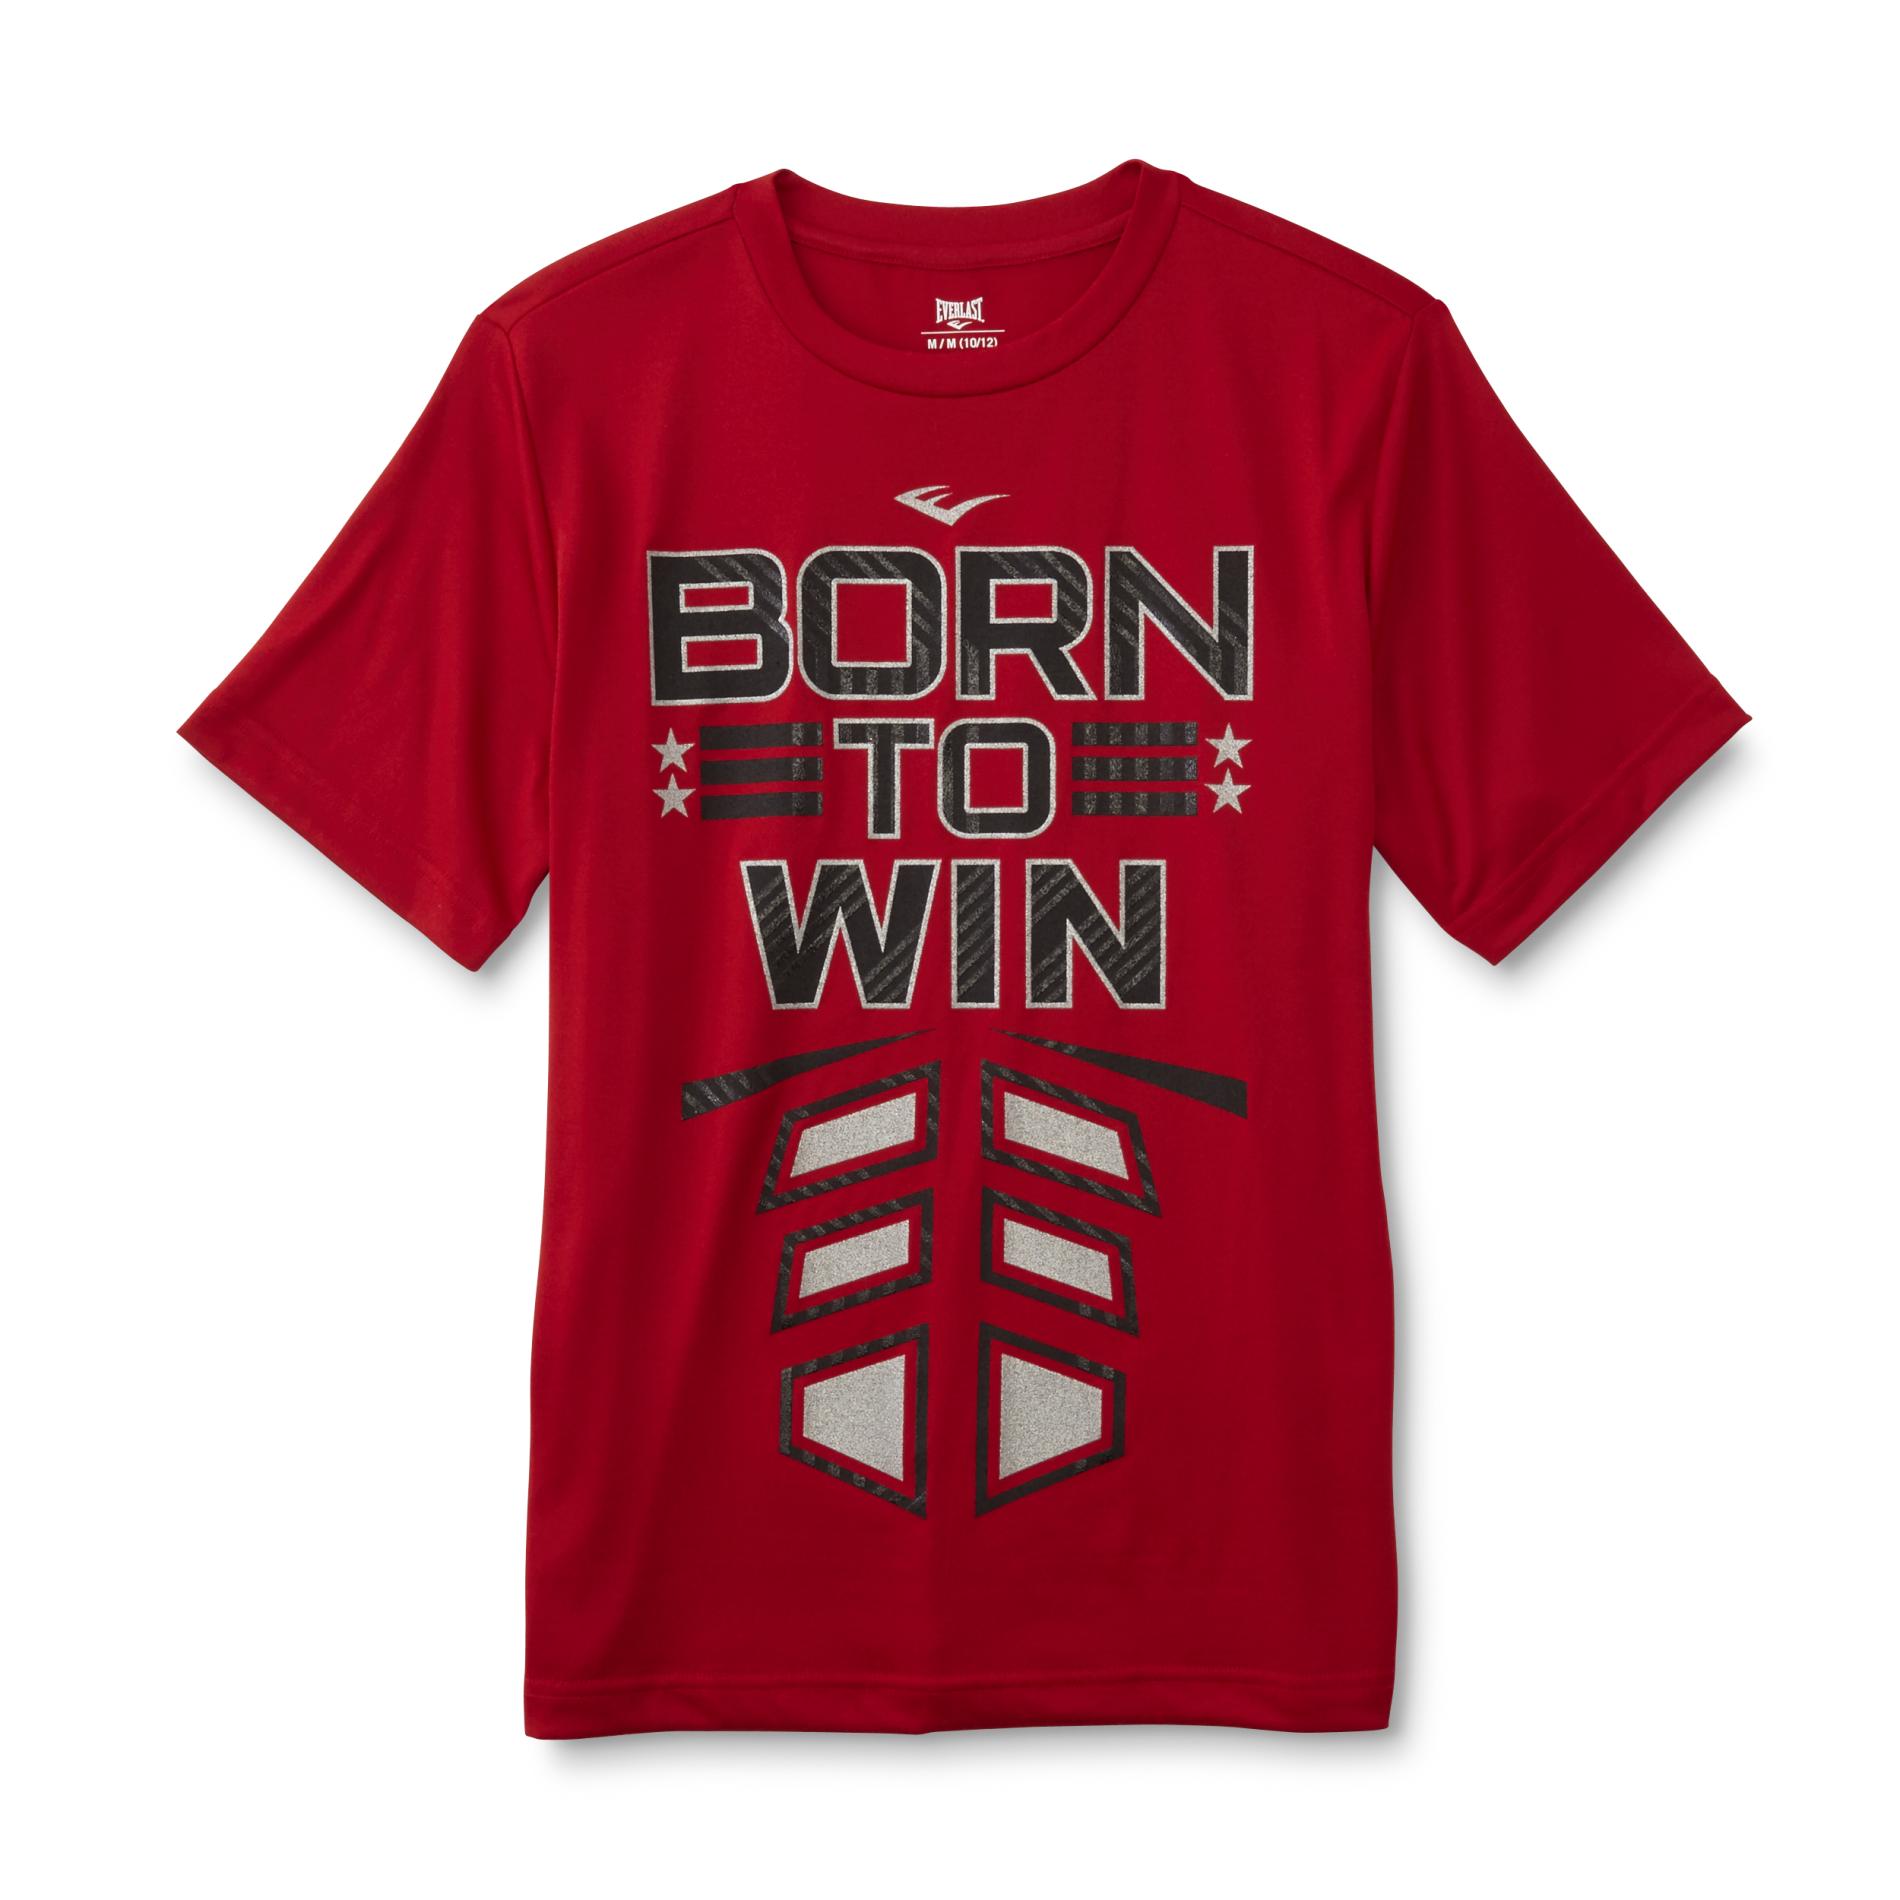 Everlast&reg; Boy's Graphic Athletic T-Shirt - Born To Win